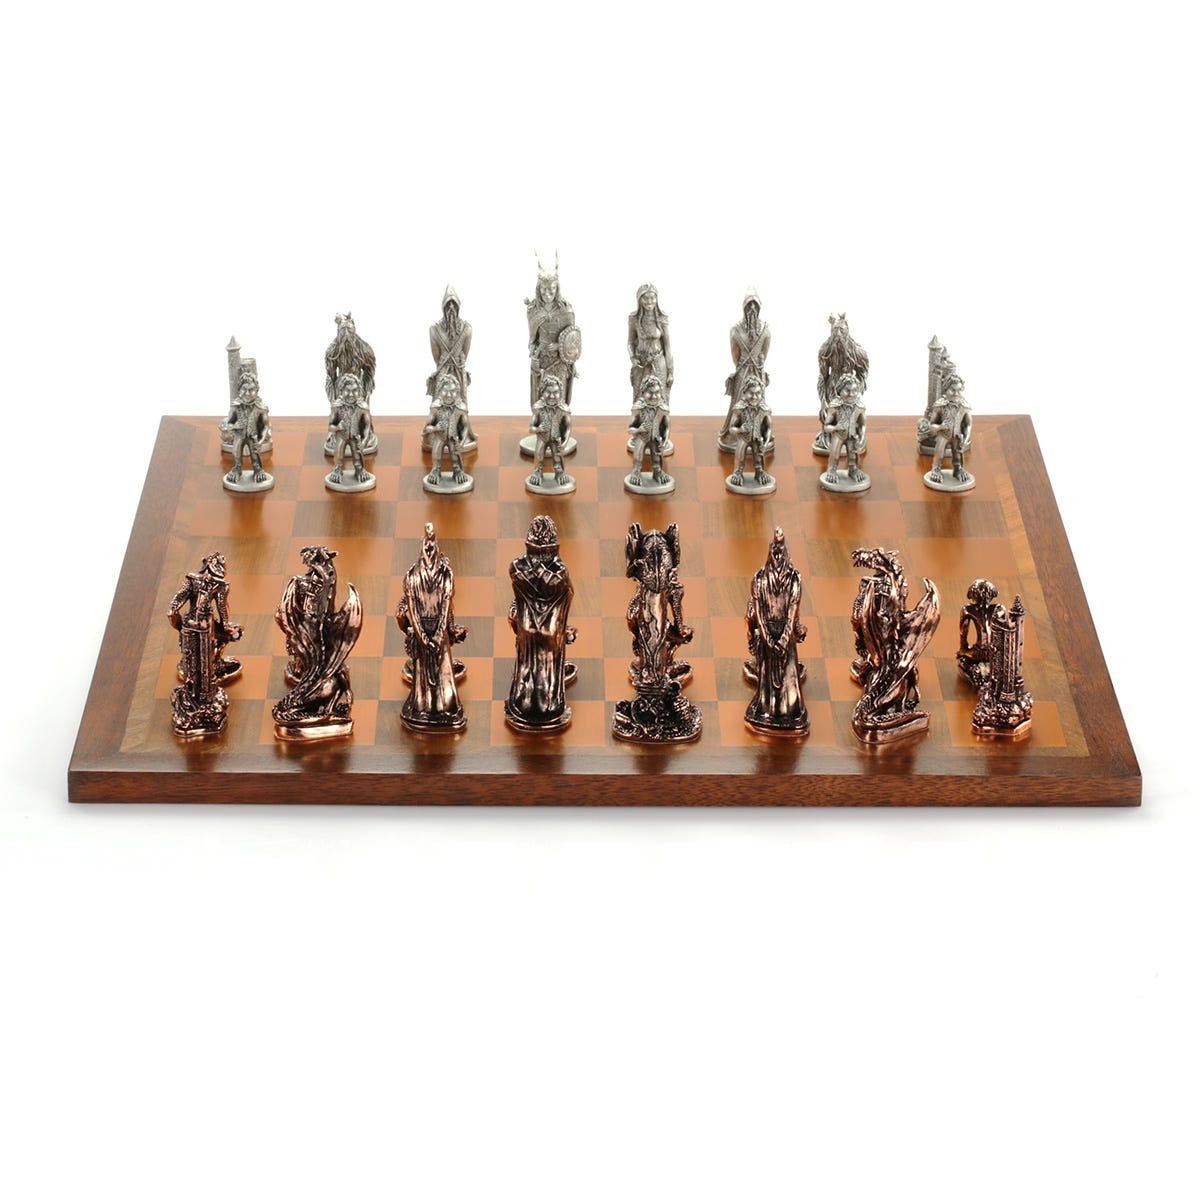 Royal Selangor War of the Rings Chess Set - Pewter - Notbrand